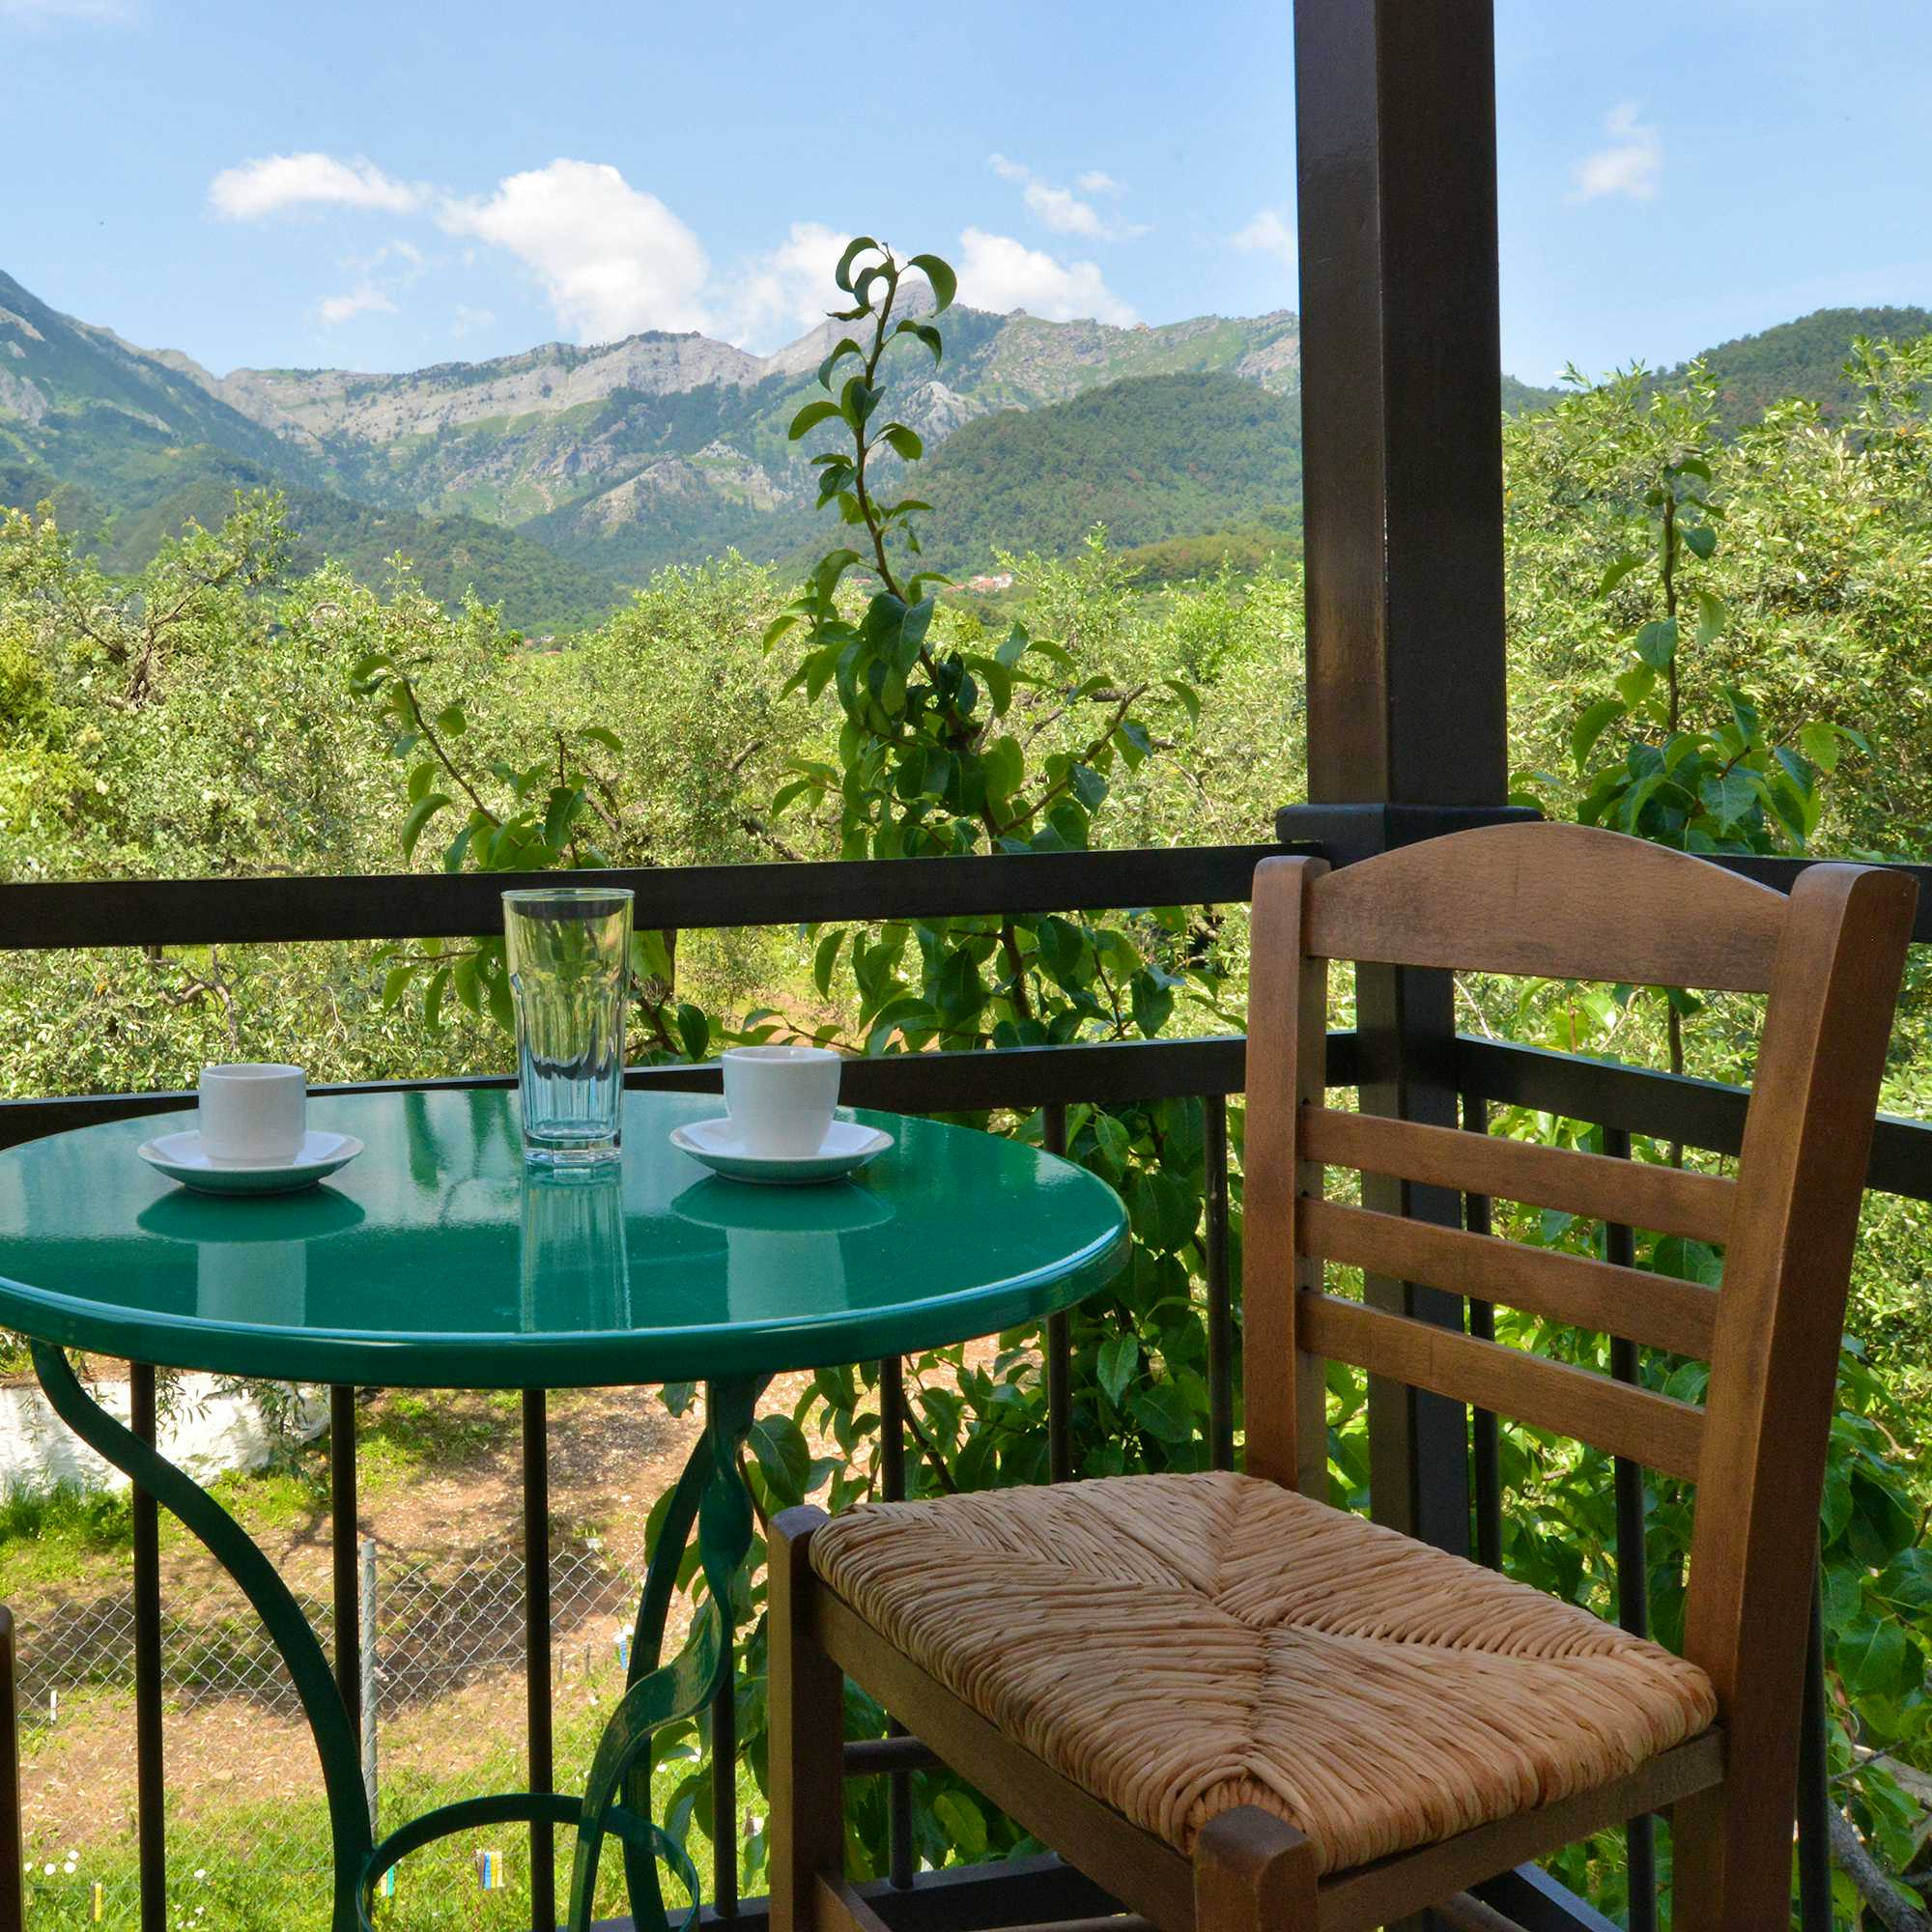 Photo Caption: Απολαύστε τον πρωινό καφέ και τα αρώματα της φύσης από το μπαλκόνι σας